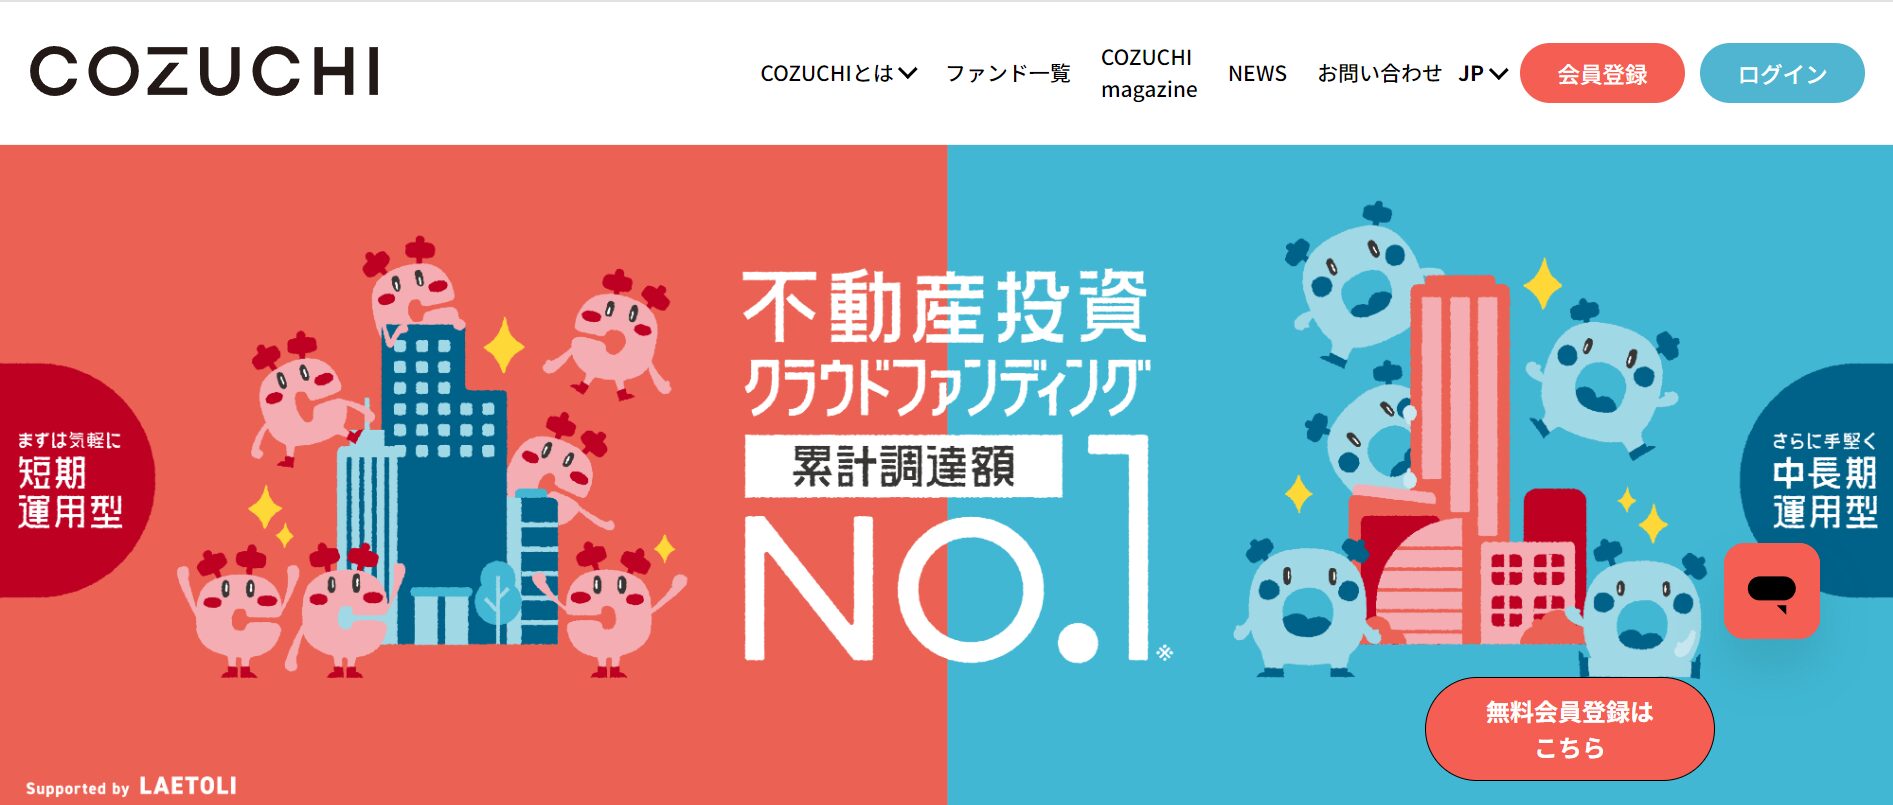 COZUCHI公式サイトトップ